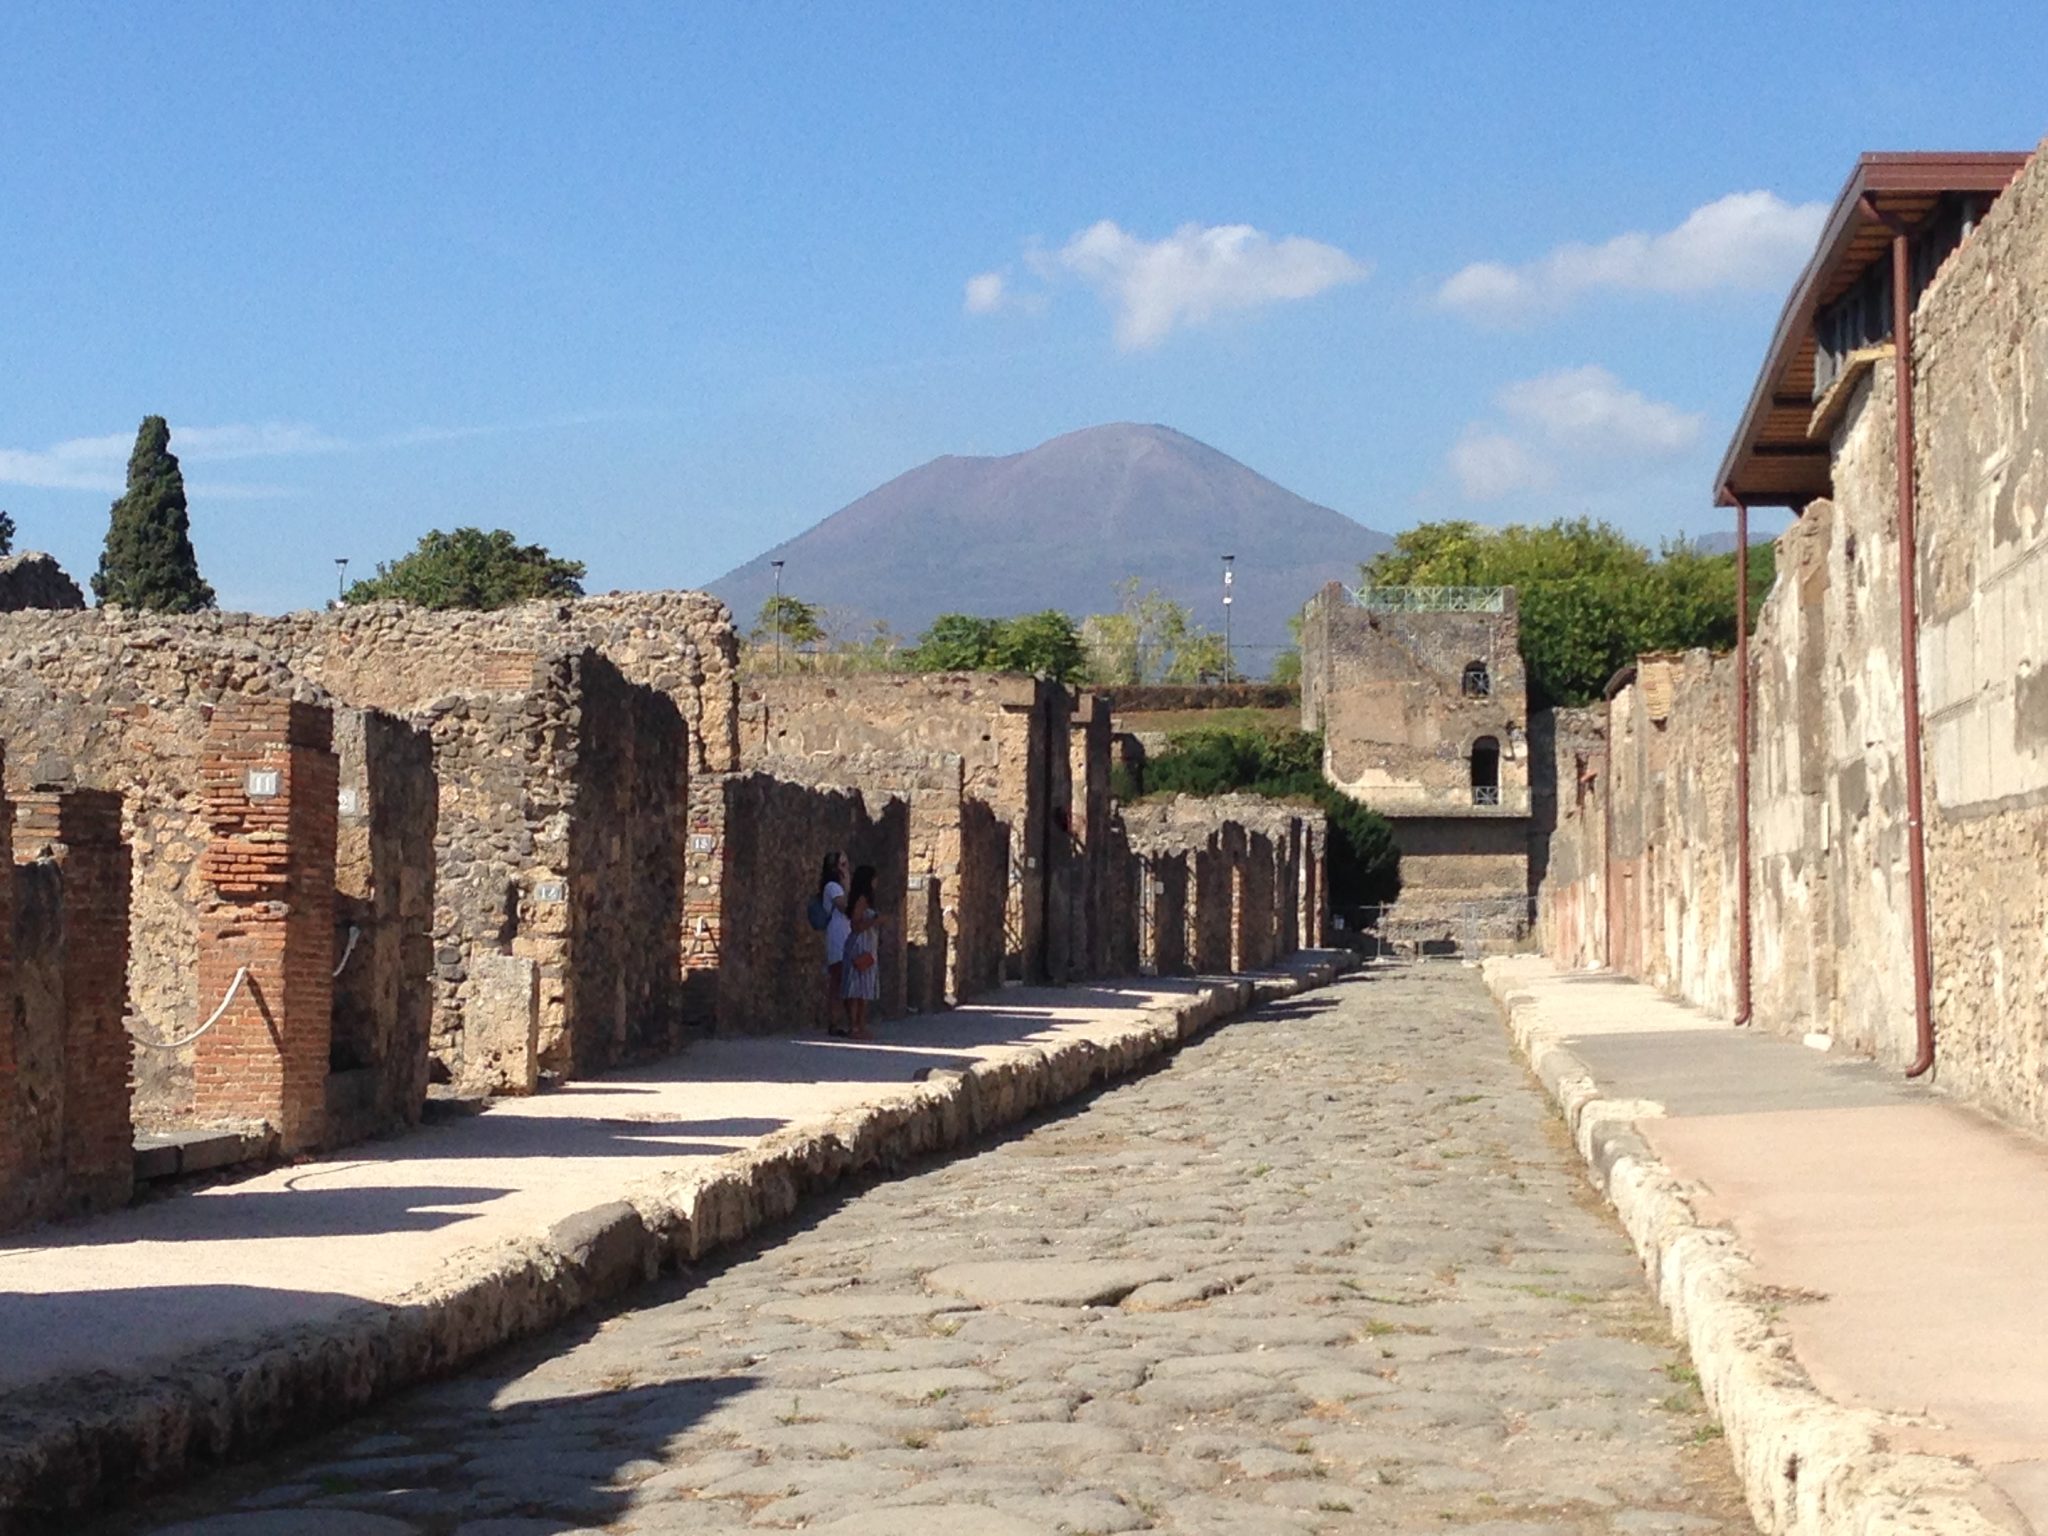 Roman ruins with Vesuvius in the background, Pompeii, Italy